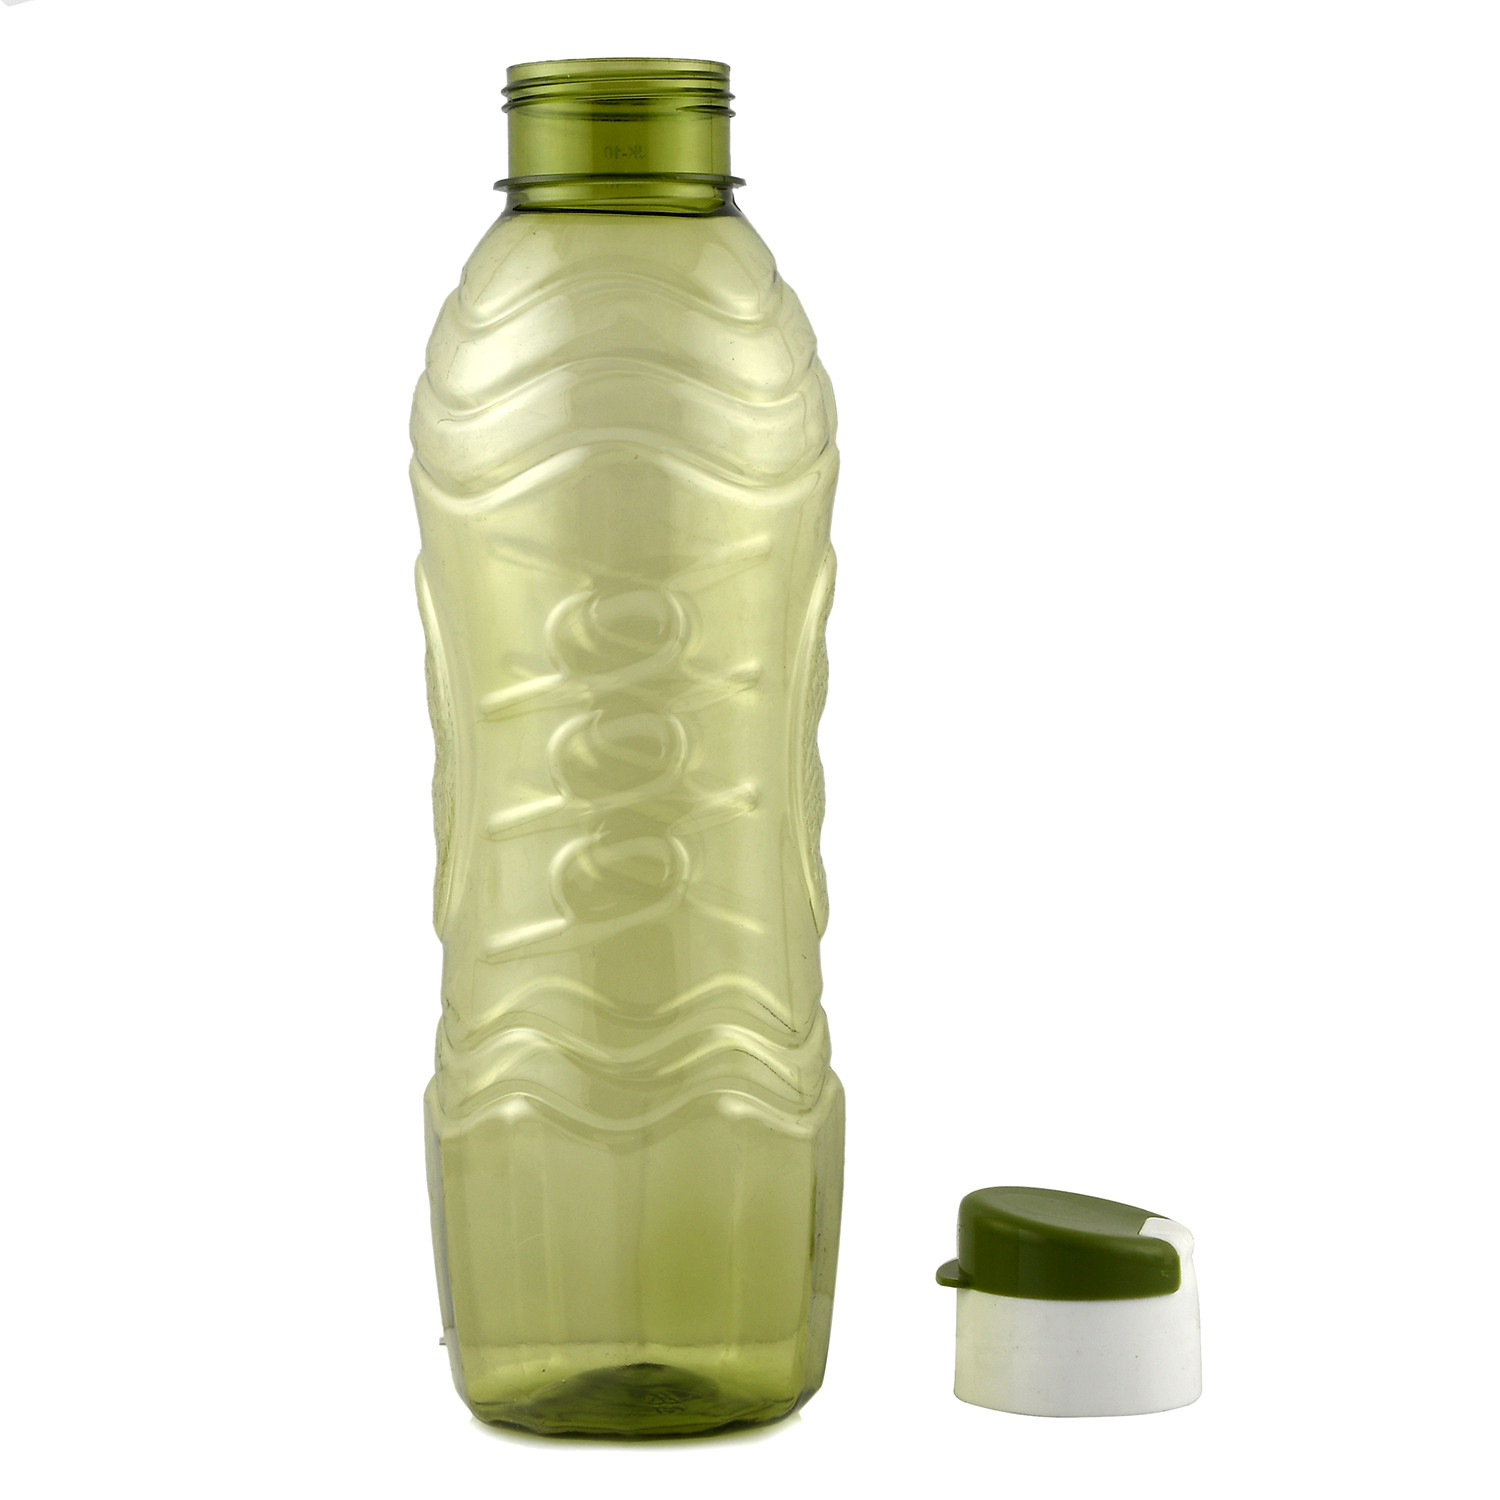 Kuber Industries Plastic Fridge Water Bottle Set with Flip Cap (1000ml, Green & Sky Blue & Pink)-KUBMART1534